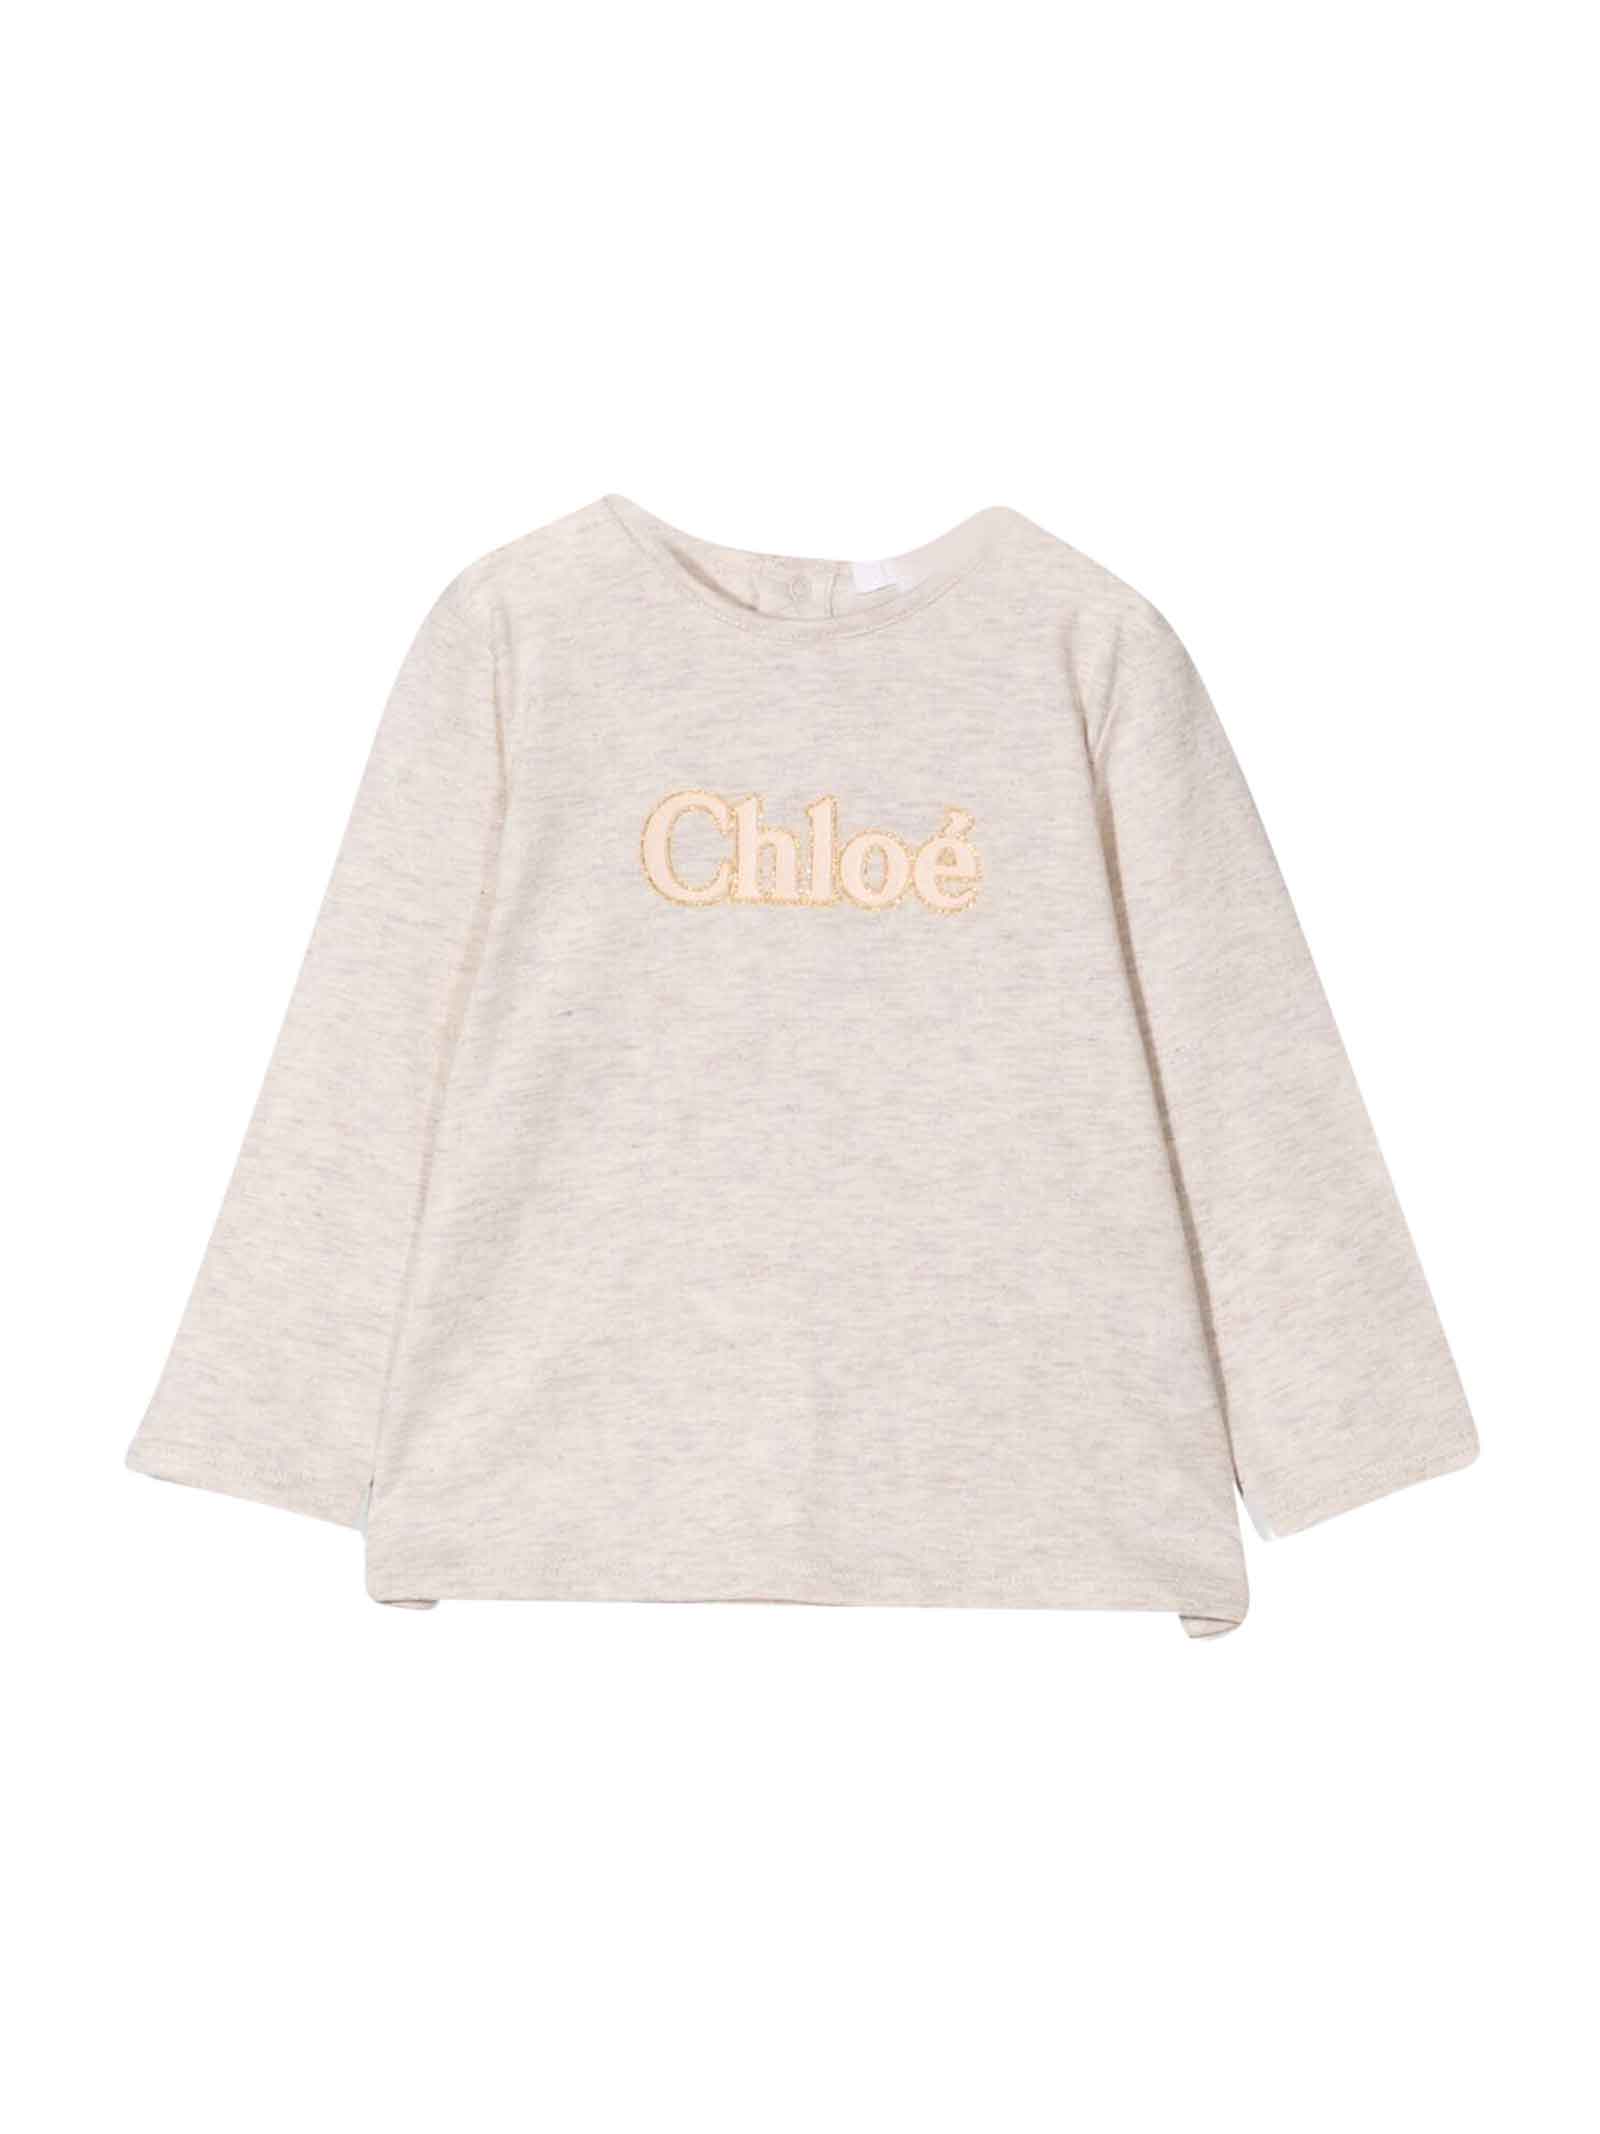 Chloé Beige T-shirt With Chloe Kids Print